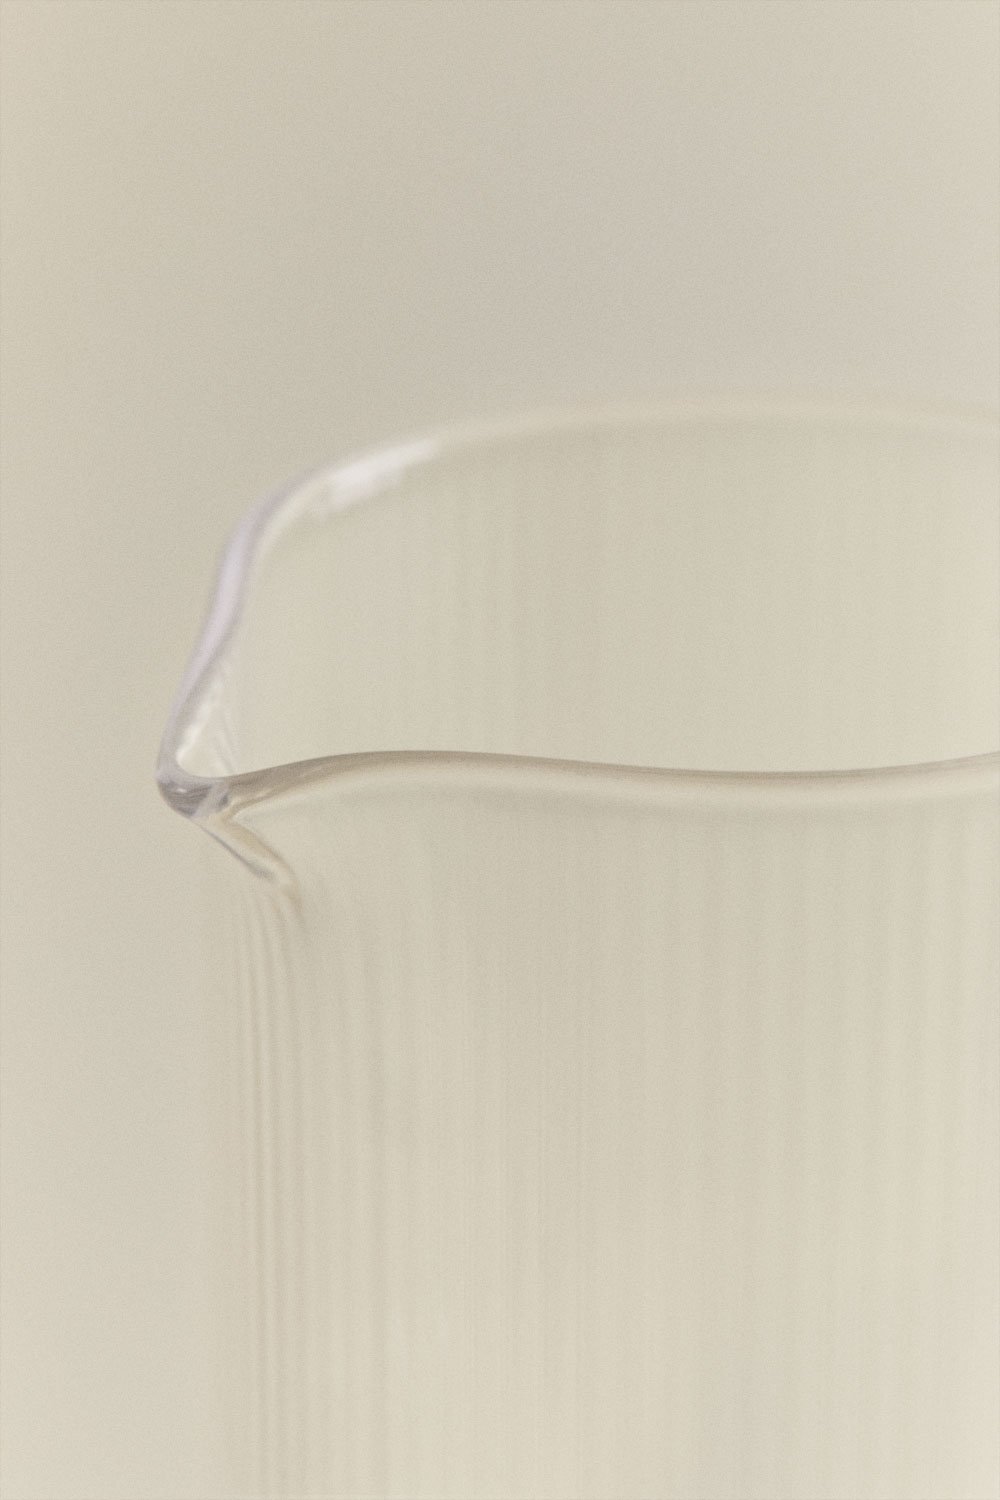 Glass jug 1 L Welian, gallery image 2